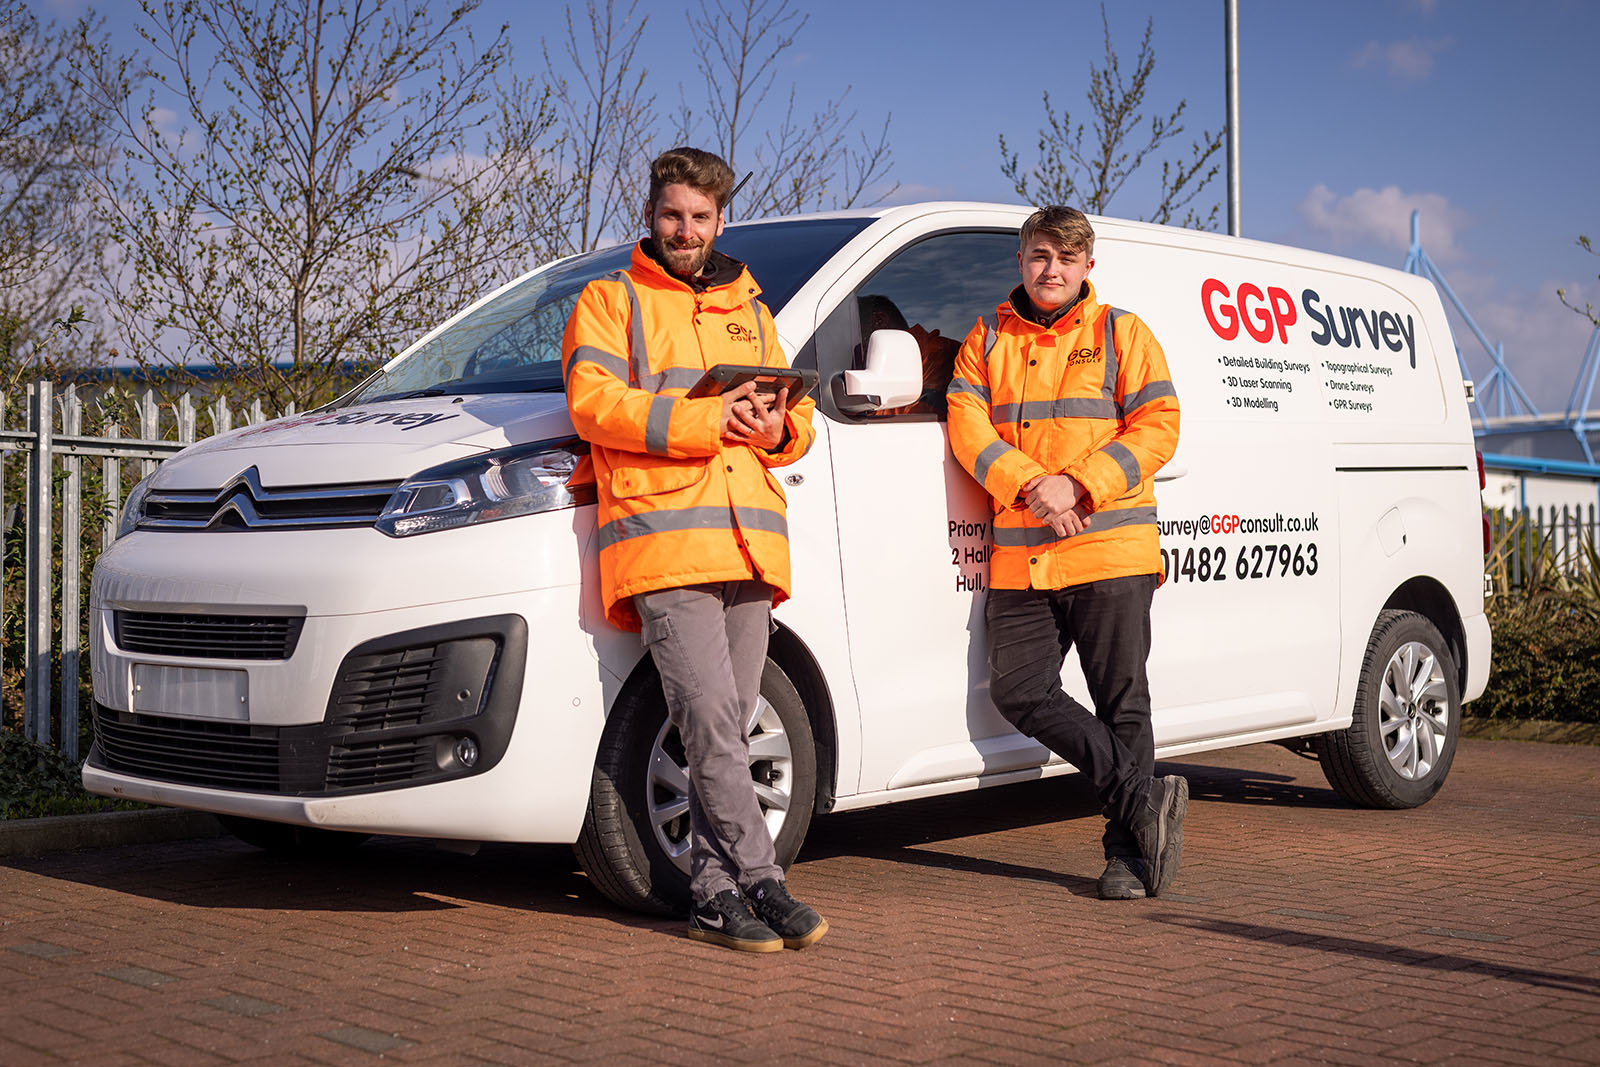 Two workmen in uniform stood in front of a GGP Survey van.